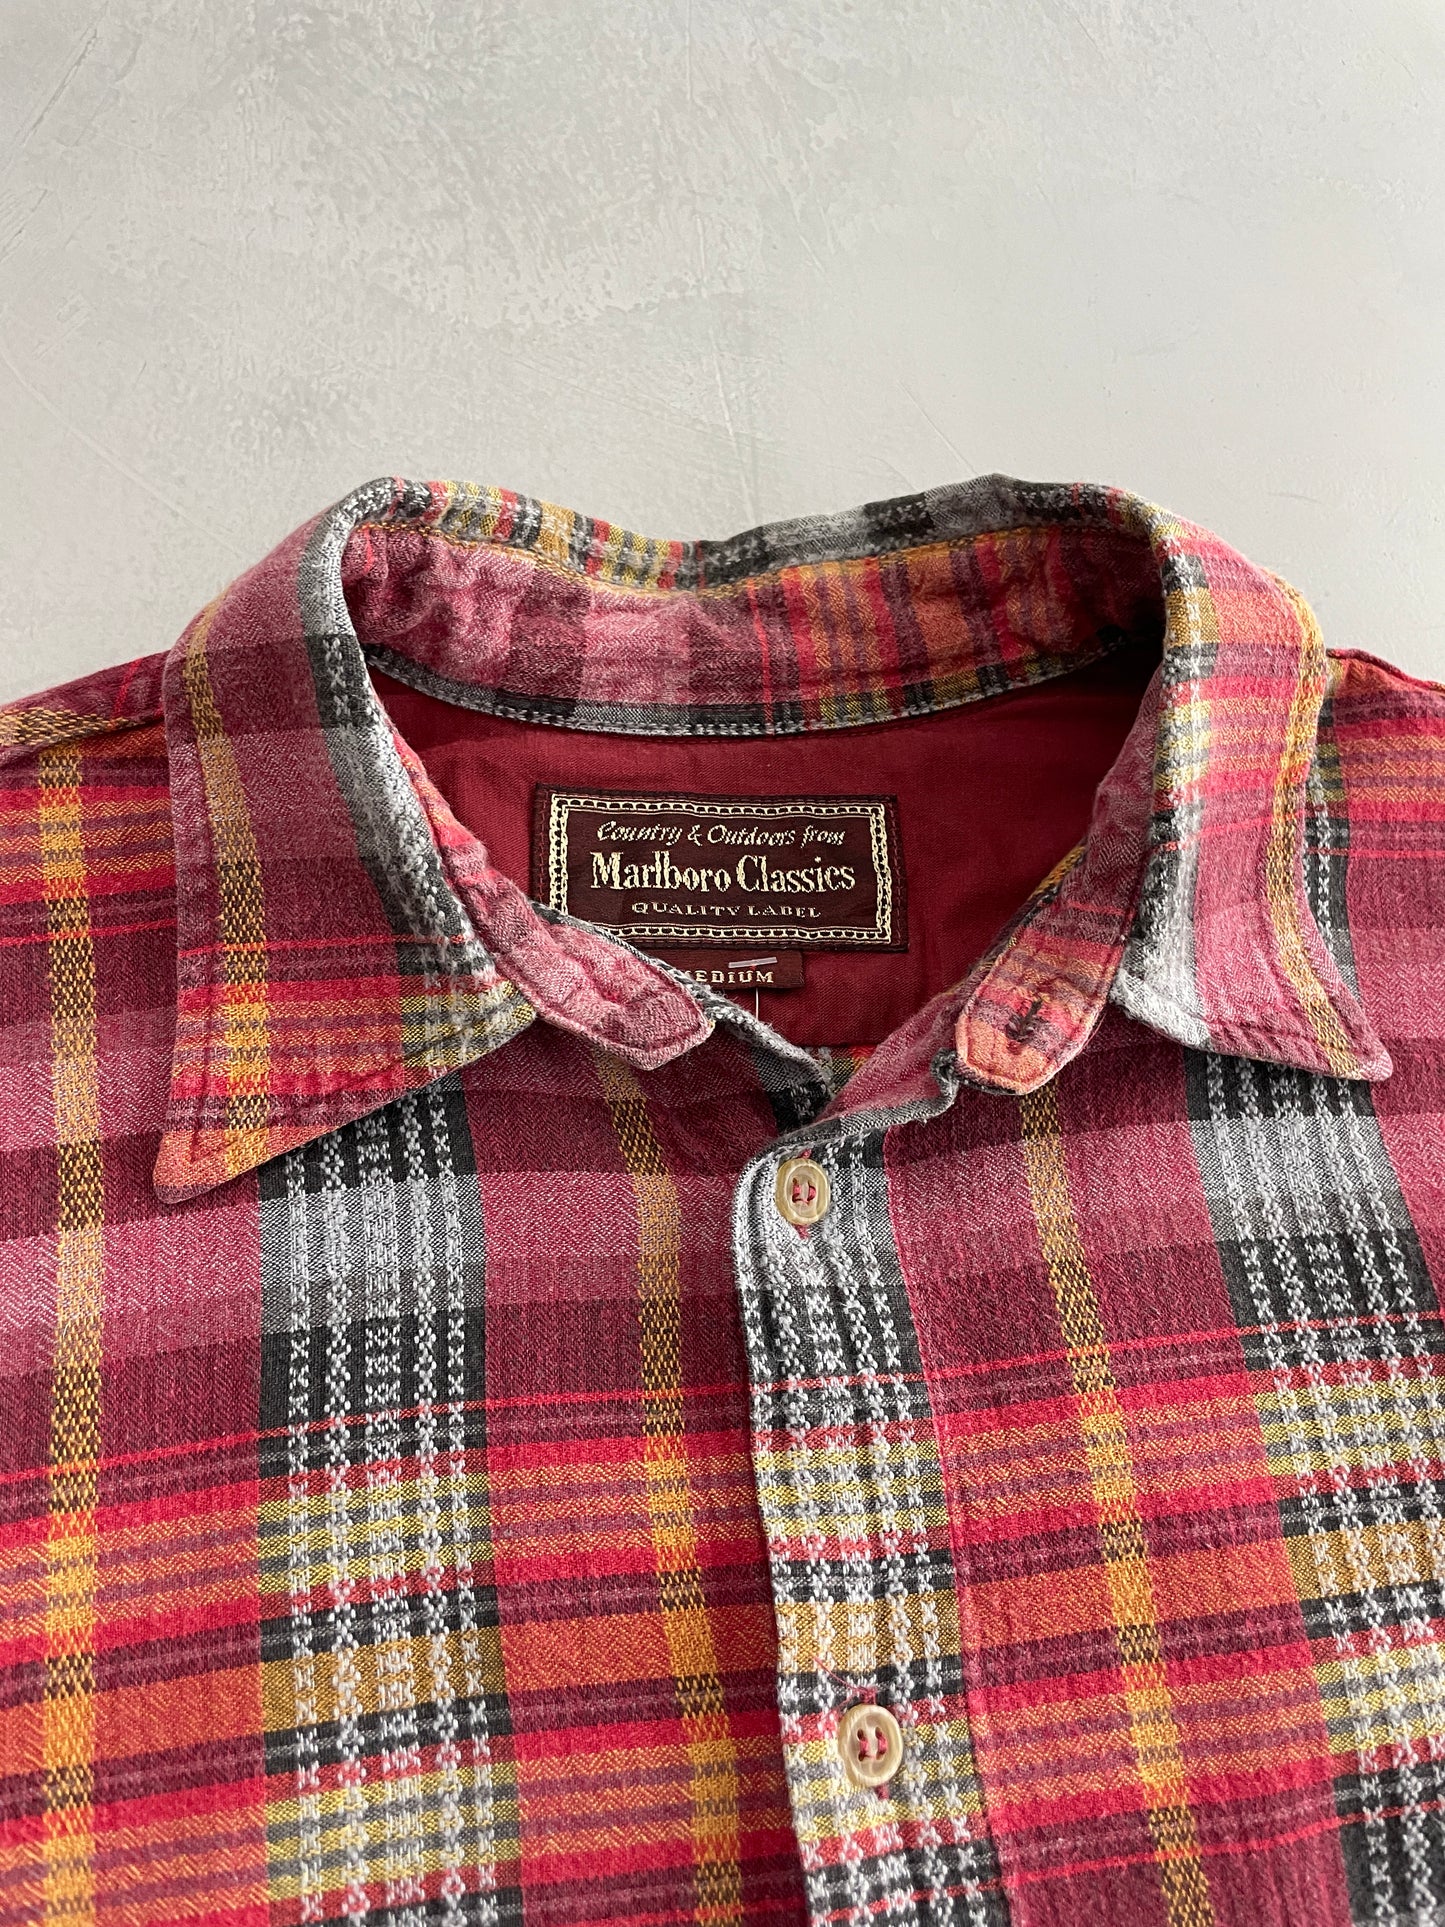 Marlboro Classic Flannel [M]